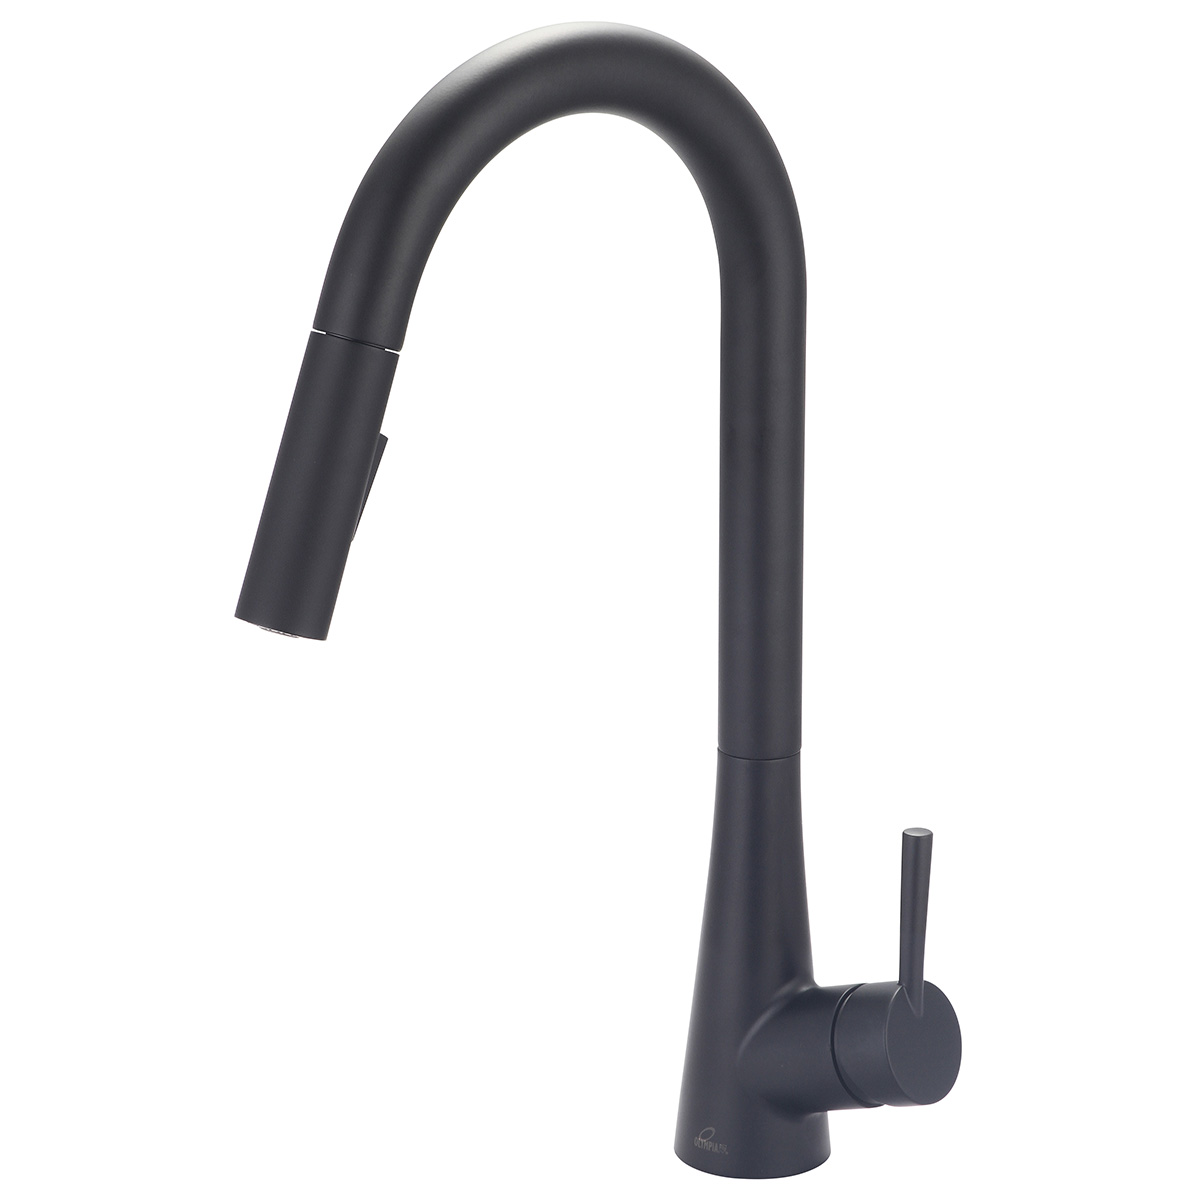 I2 K-5025-mb Single Handle Pull-down Kitchen Faucet - Matte Black